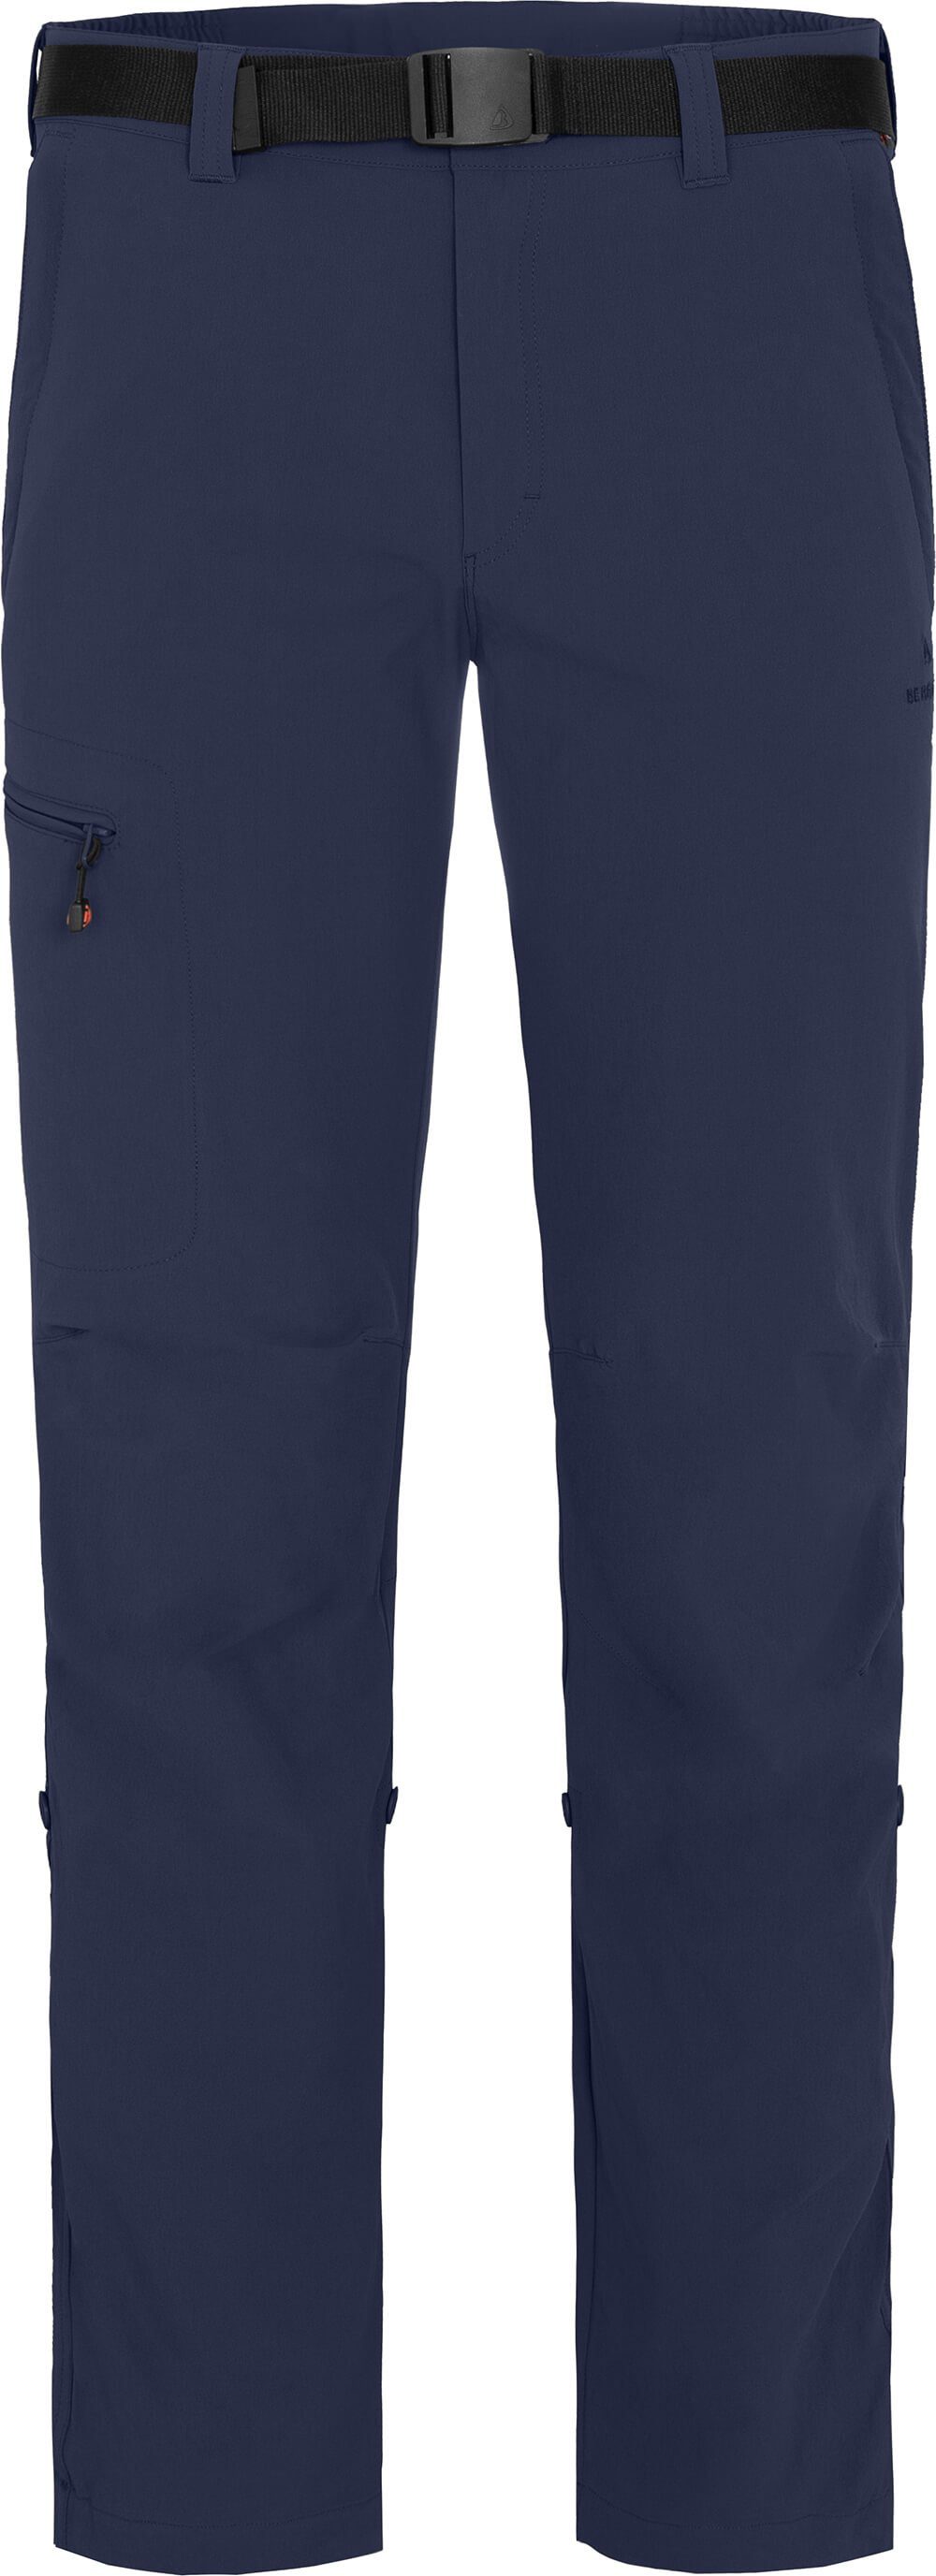 Bergson Outdoorhose REDWOOD Herren Wanderhose, vielseitig, pflegeleicht, Kurzgrößen, peacoat blau | Shorts